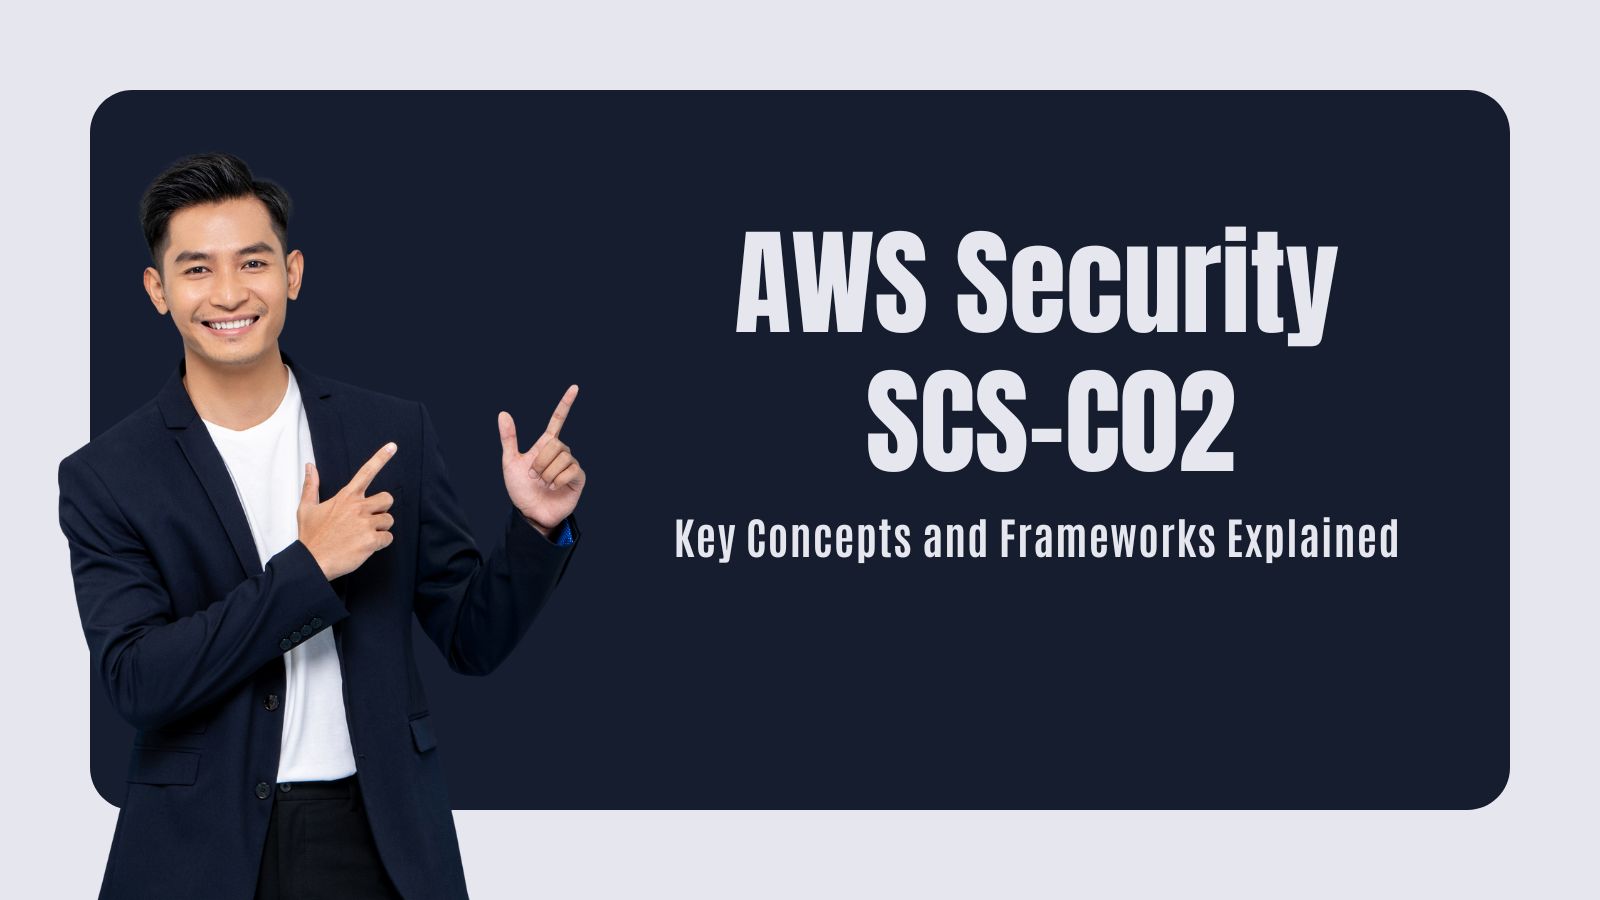 aws security scs-c02